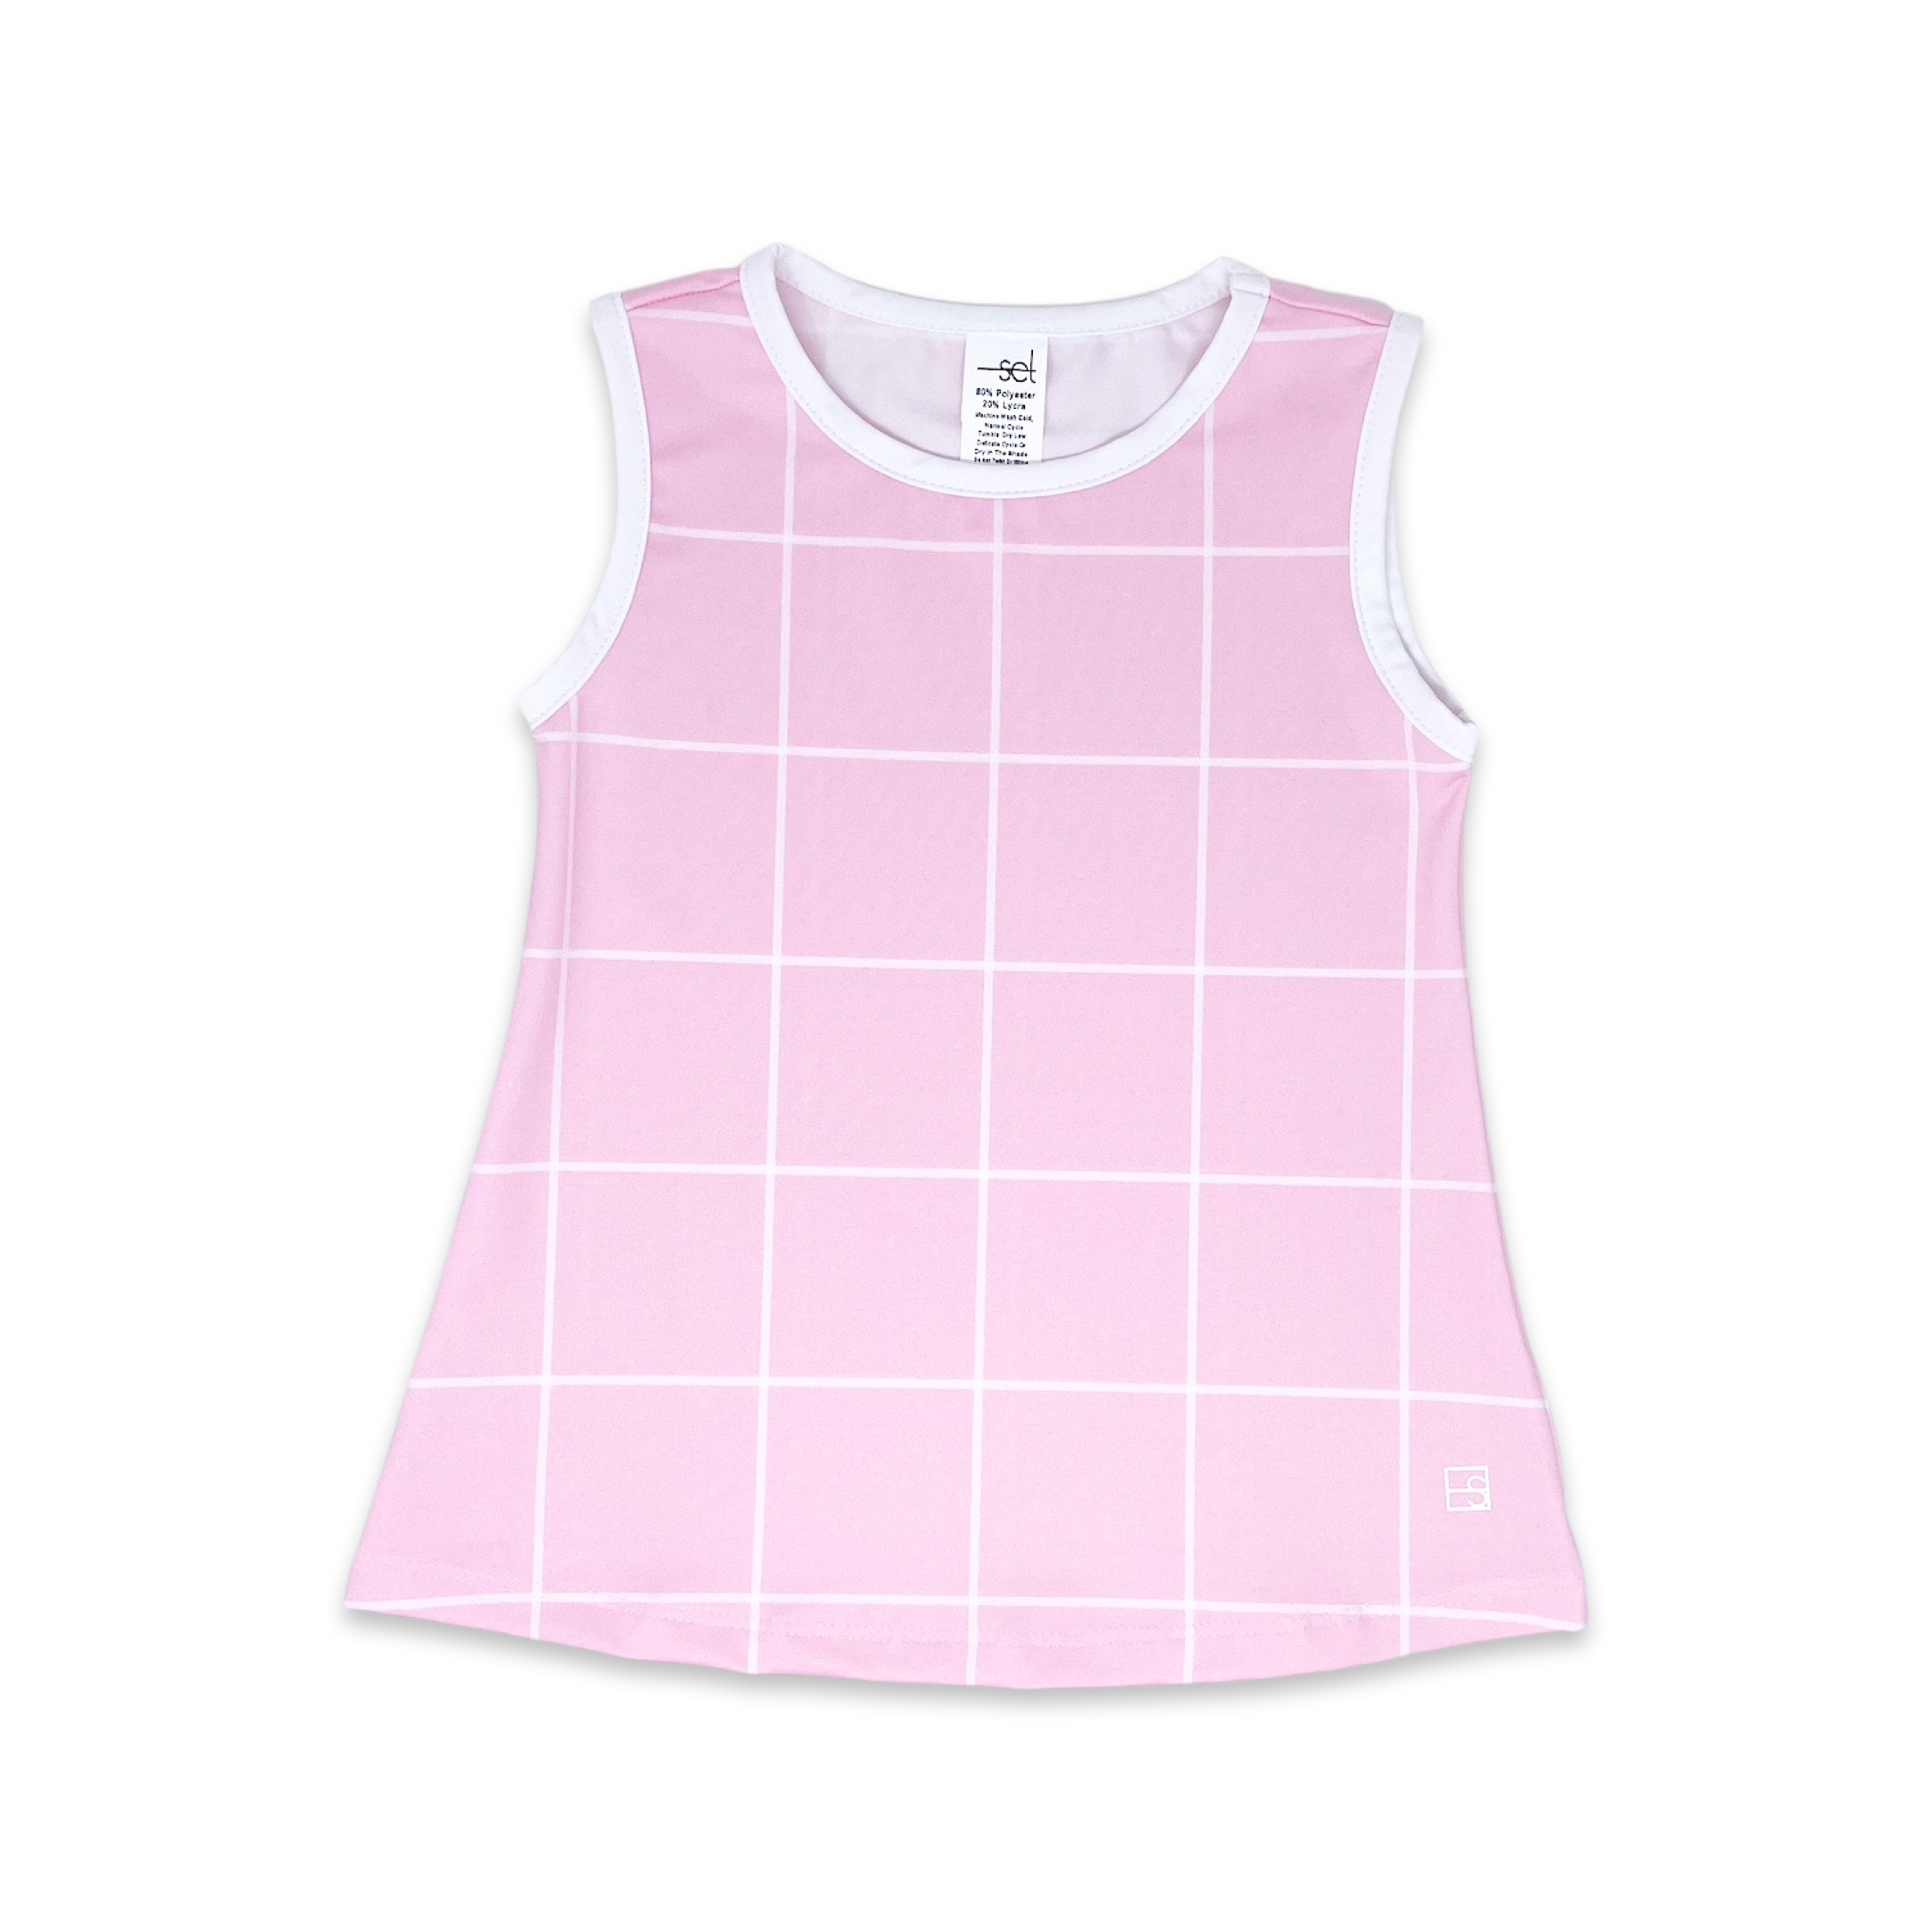 Tori Tank-Cotton Candy/Pink Windowpane